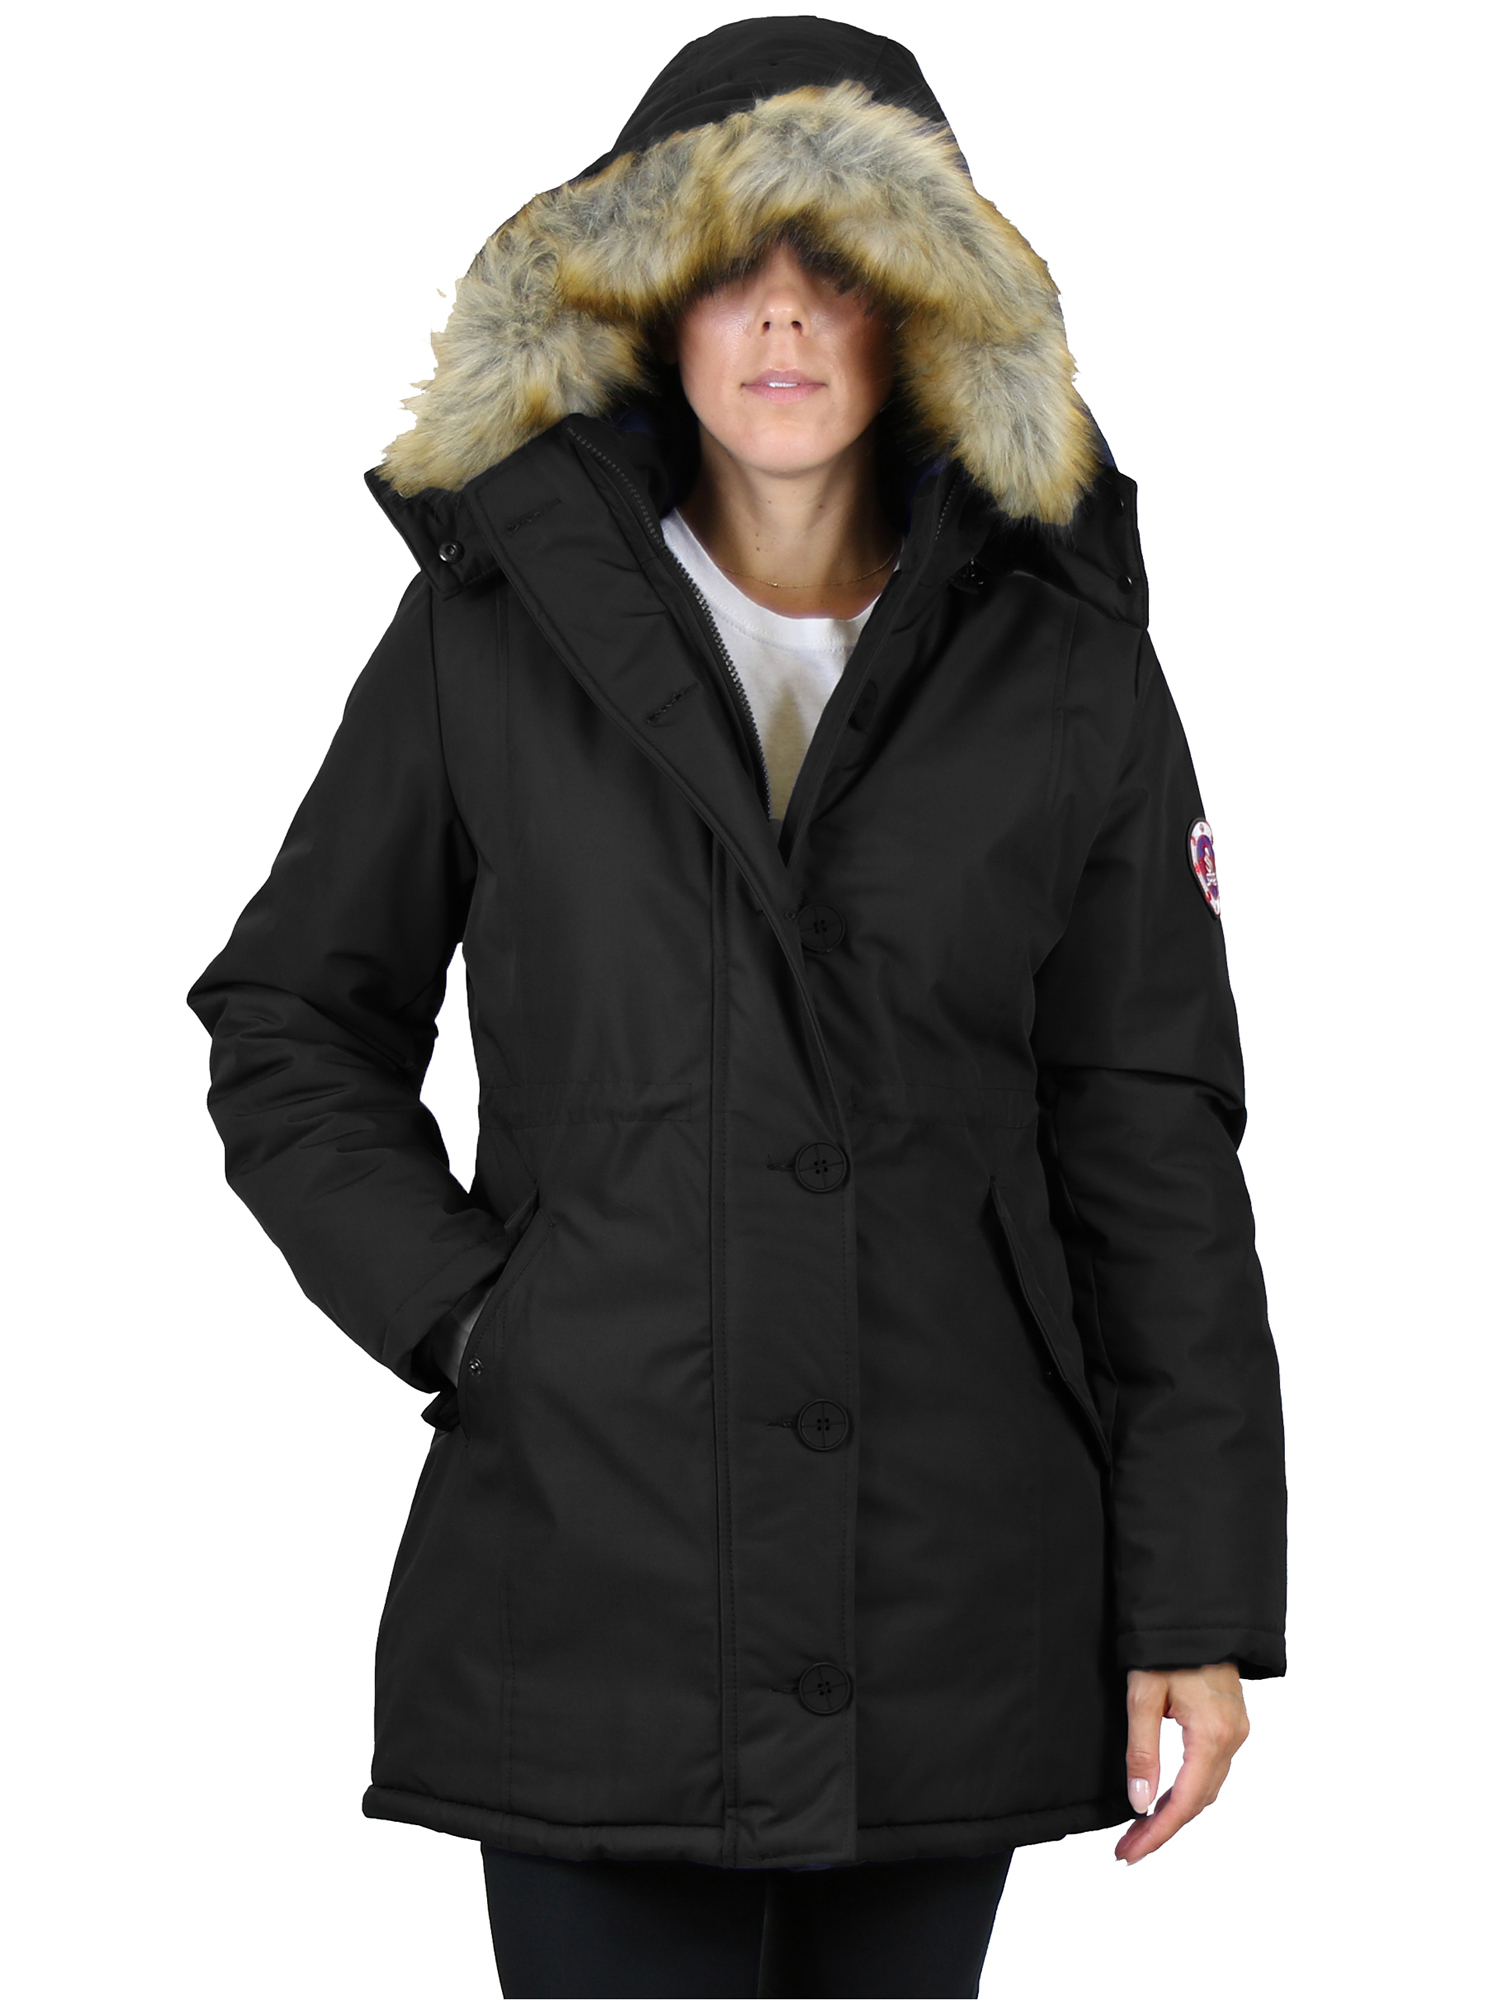 Women's Heavyweight Classic Long Parka Jacket With Detachable Fur Hood (S-3XL) - image 2 of 8